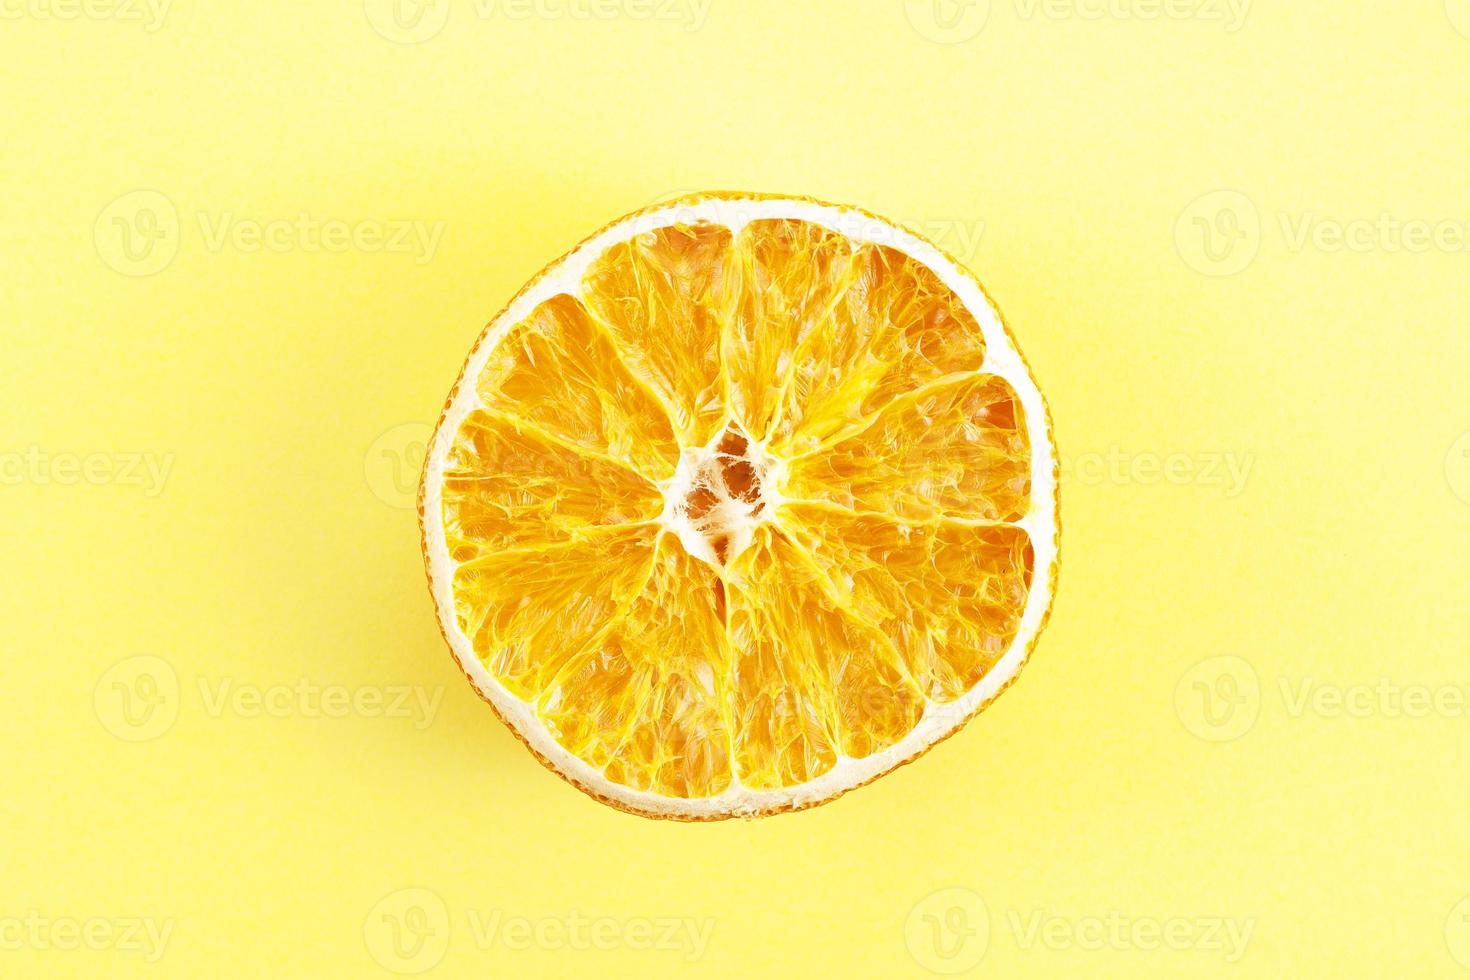 en bit torkad apelsin på gul bakgrund foto